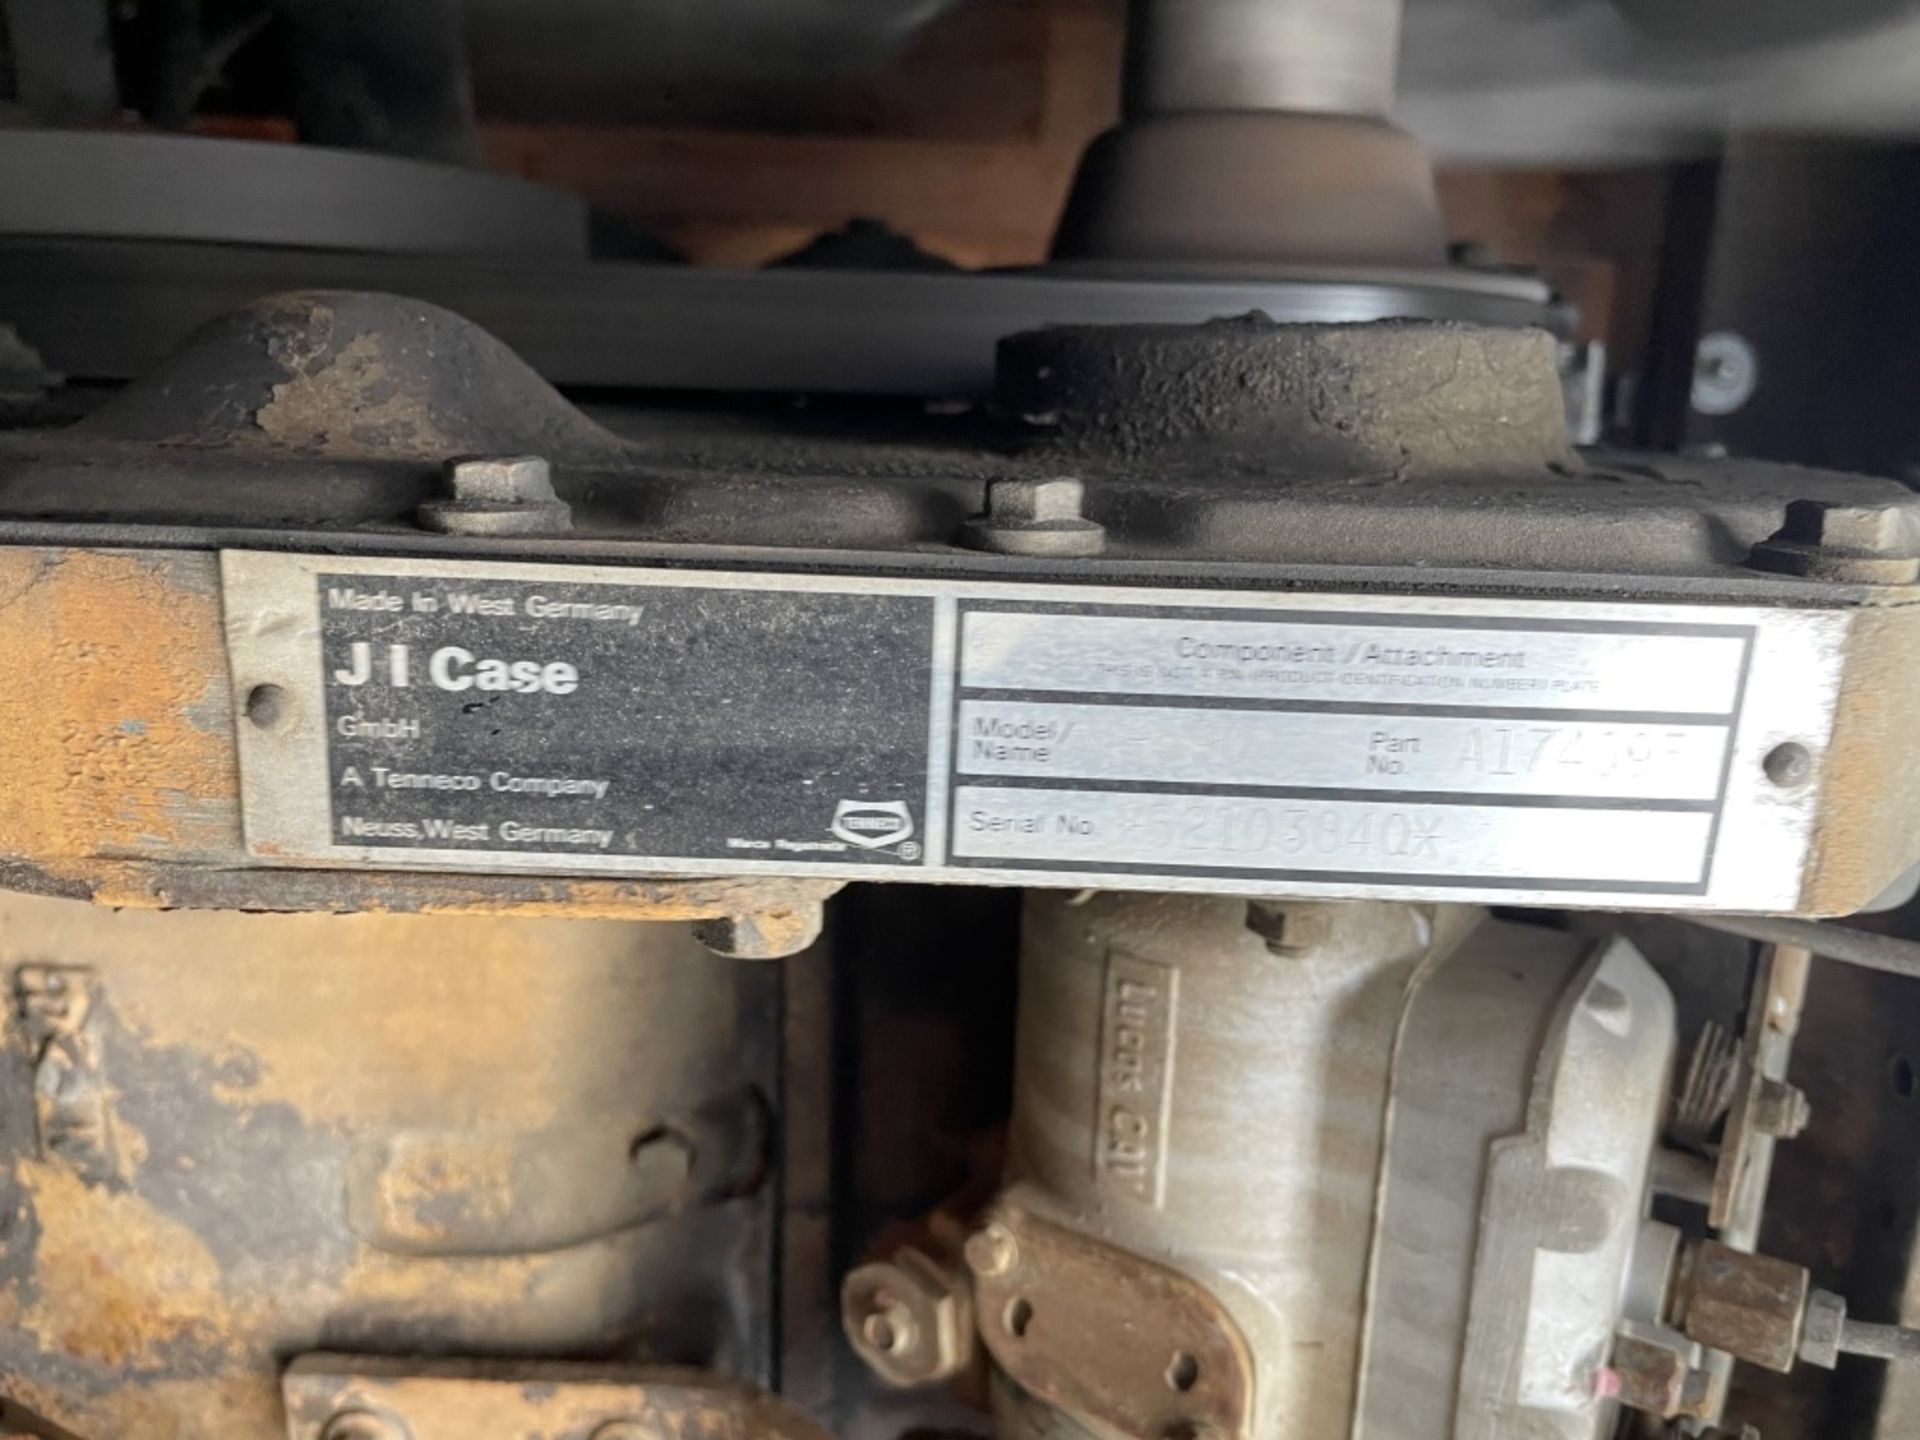 1990 Case W1102D Vibratory Compactor - Image 13 of 20